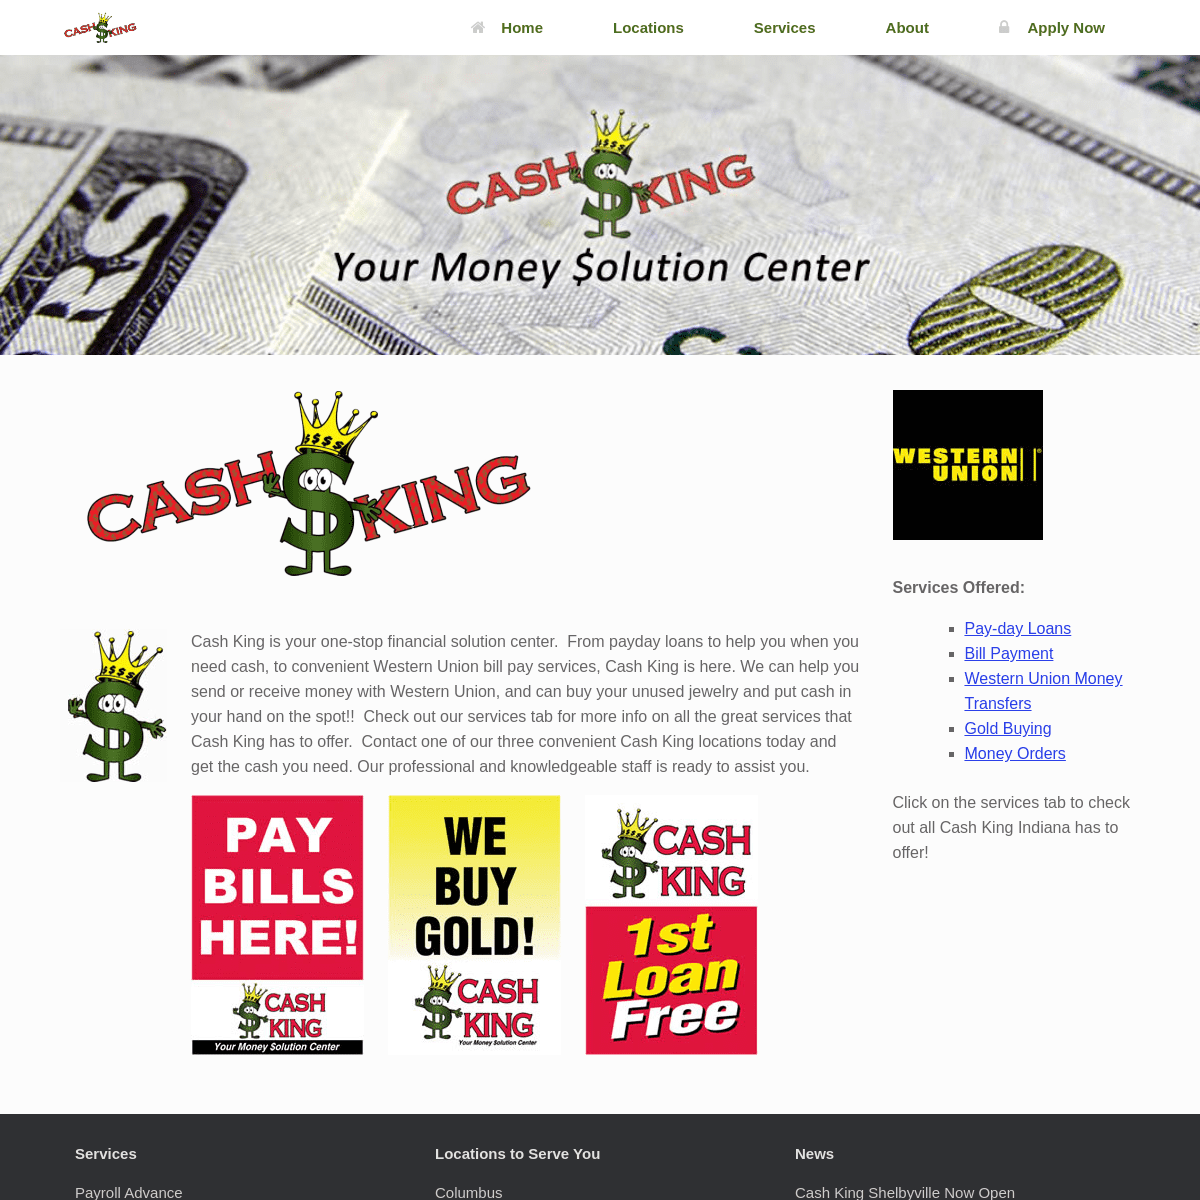 A complete backup of cashkingindiana.com